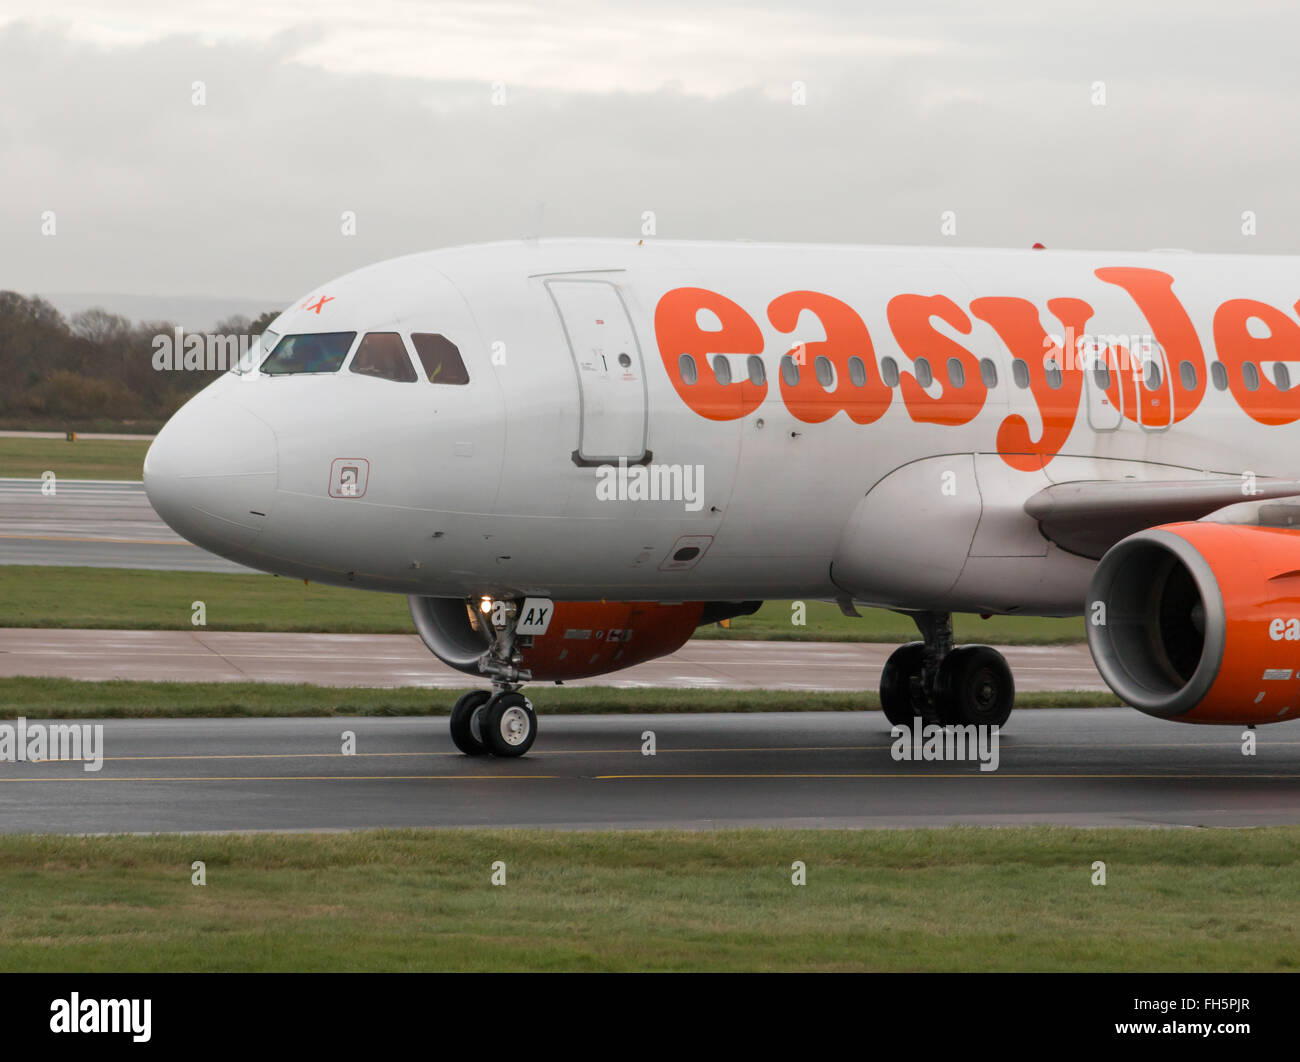 easyJet Airbus A319 narrow-body passenger plane (G-EZAX) takiing on Manchester International Airport tarmac. Stock Photo